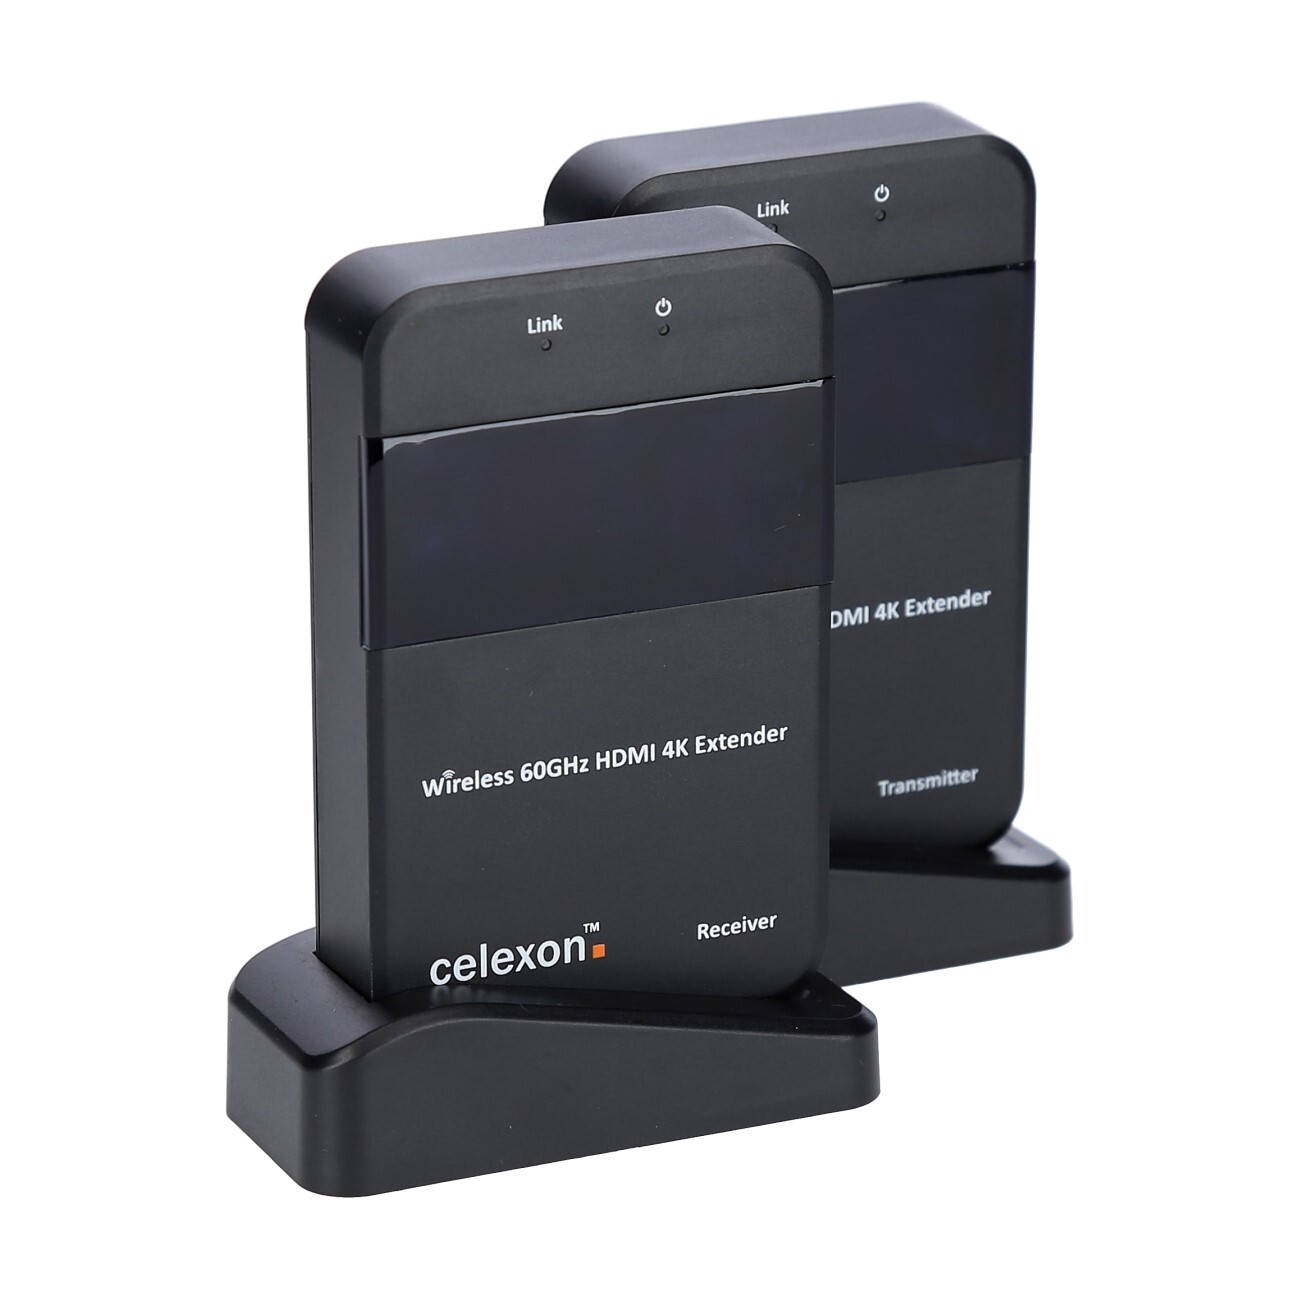 celexon-Expert-HDMI-radiografische-set-WHD30M-Demo